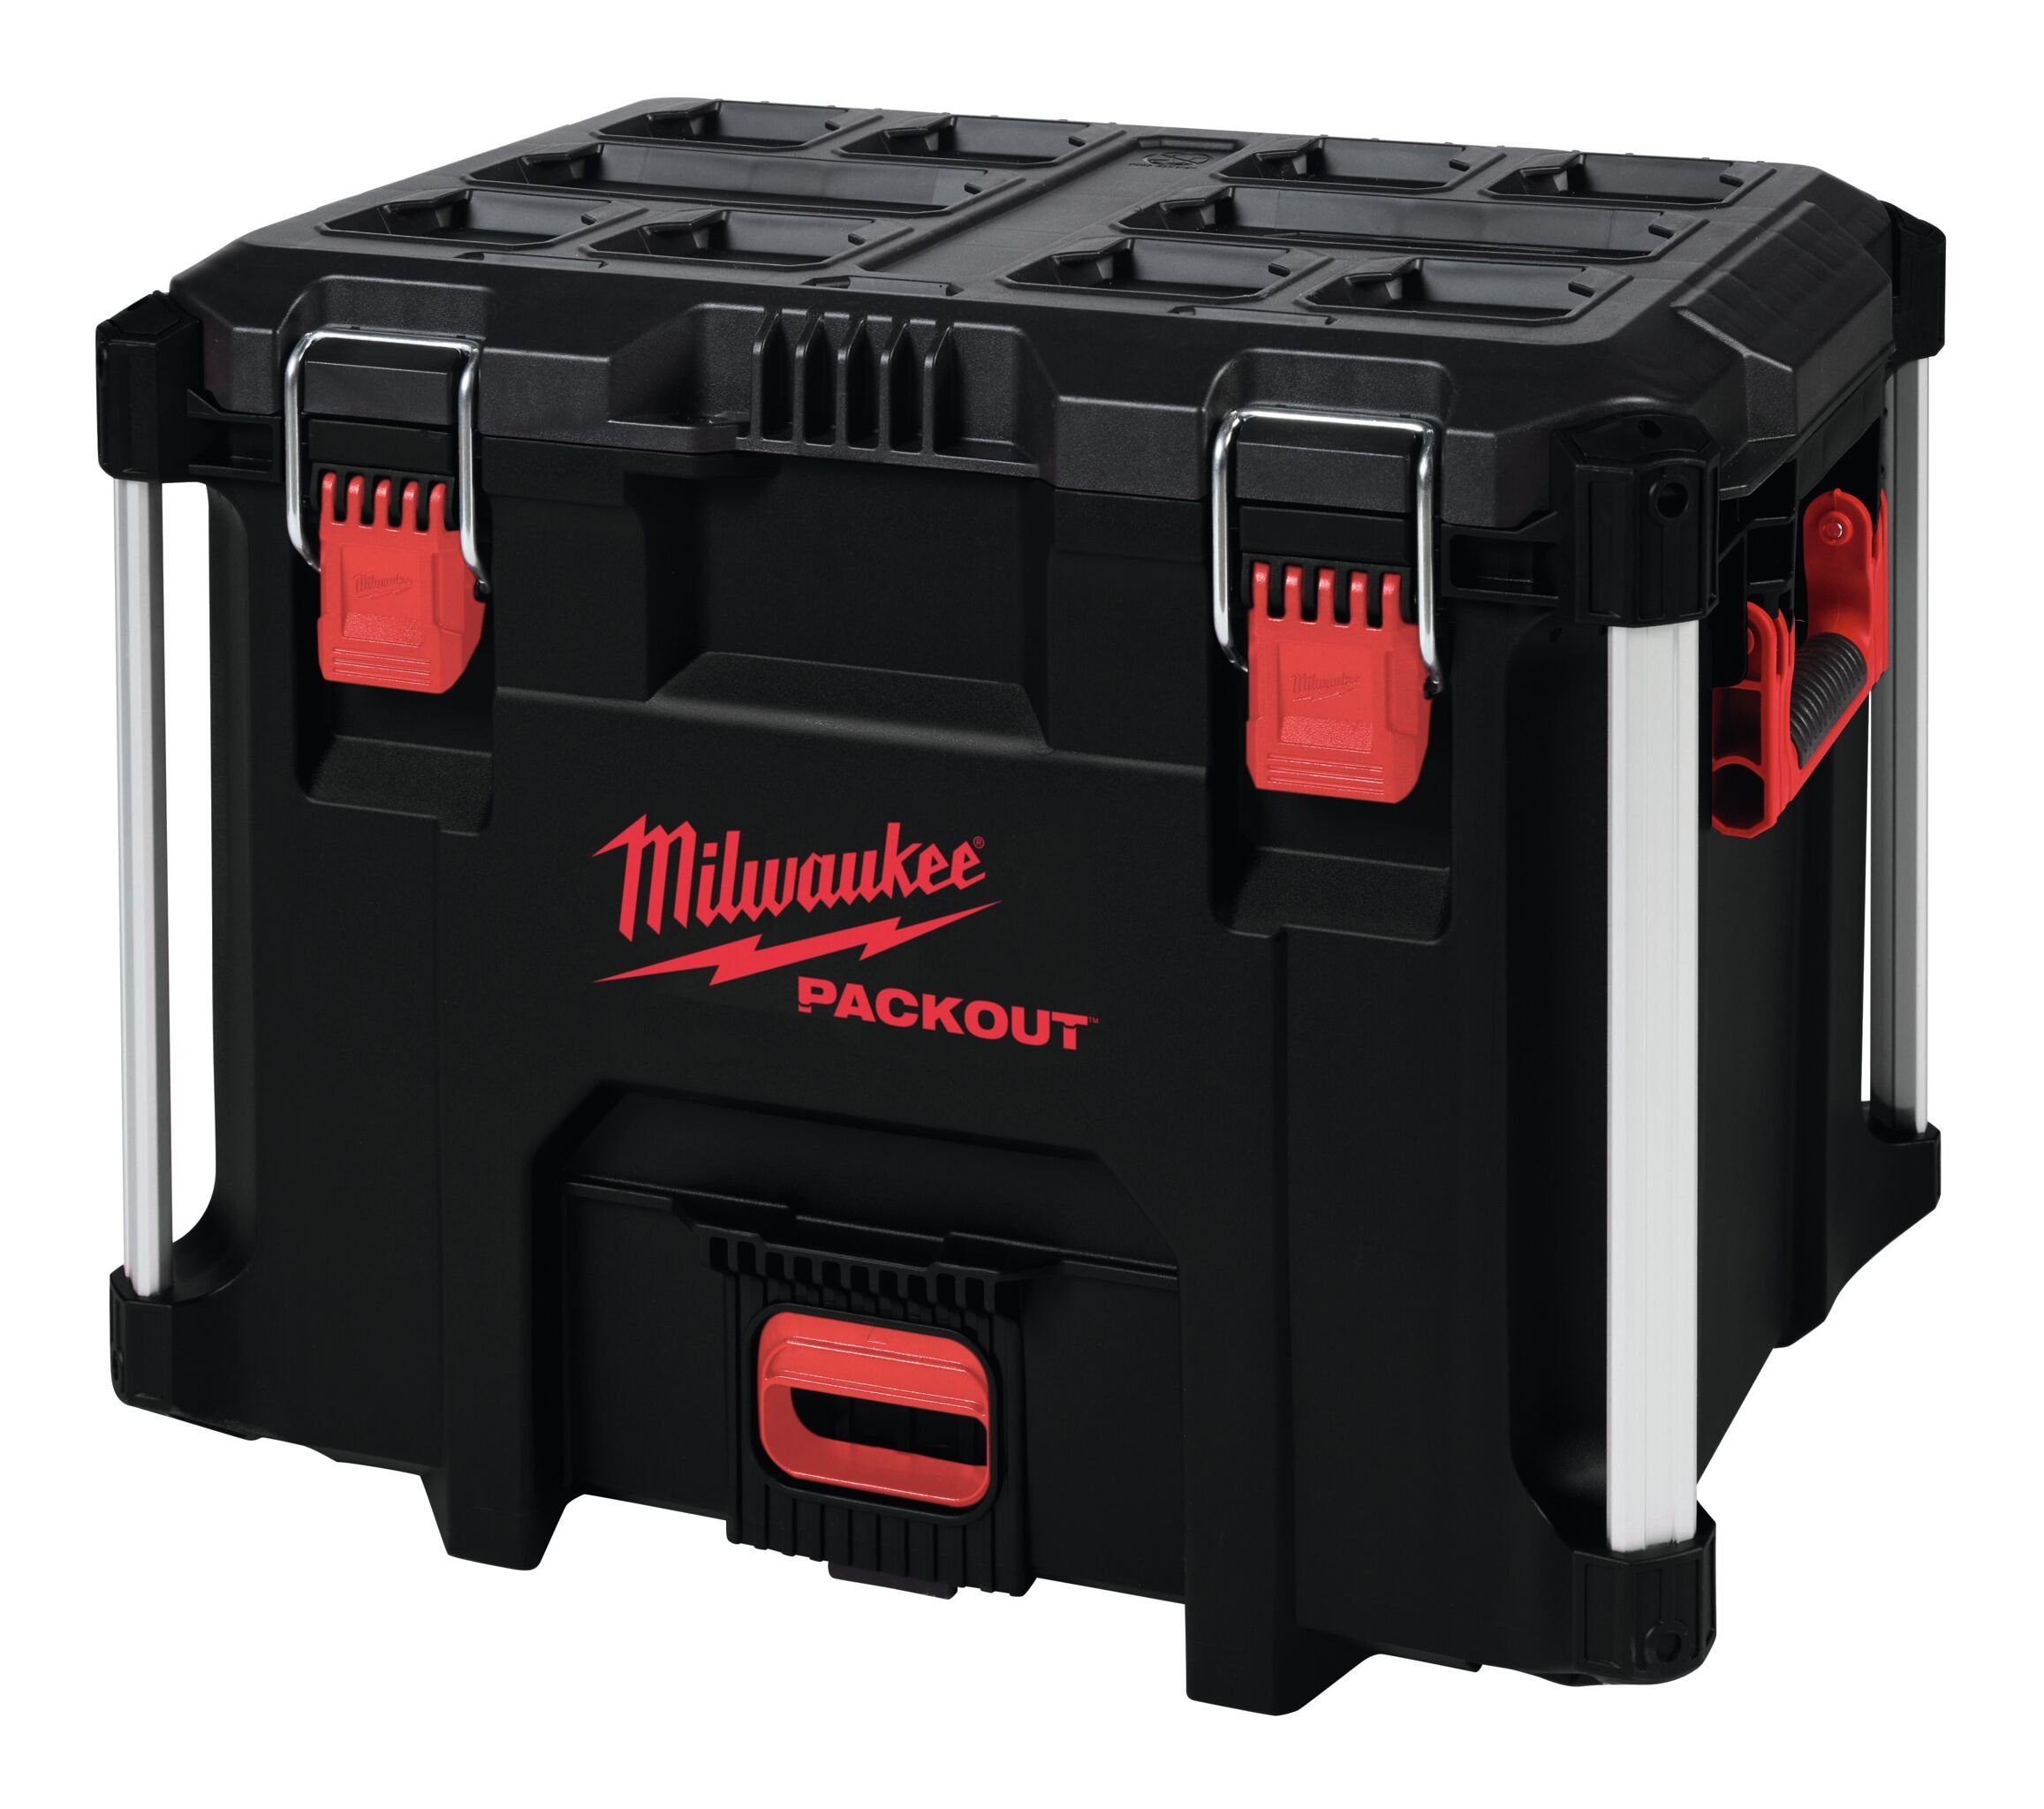 Milwaukee Werkzeugkoffer, Packout XL Koffer